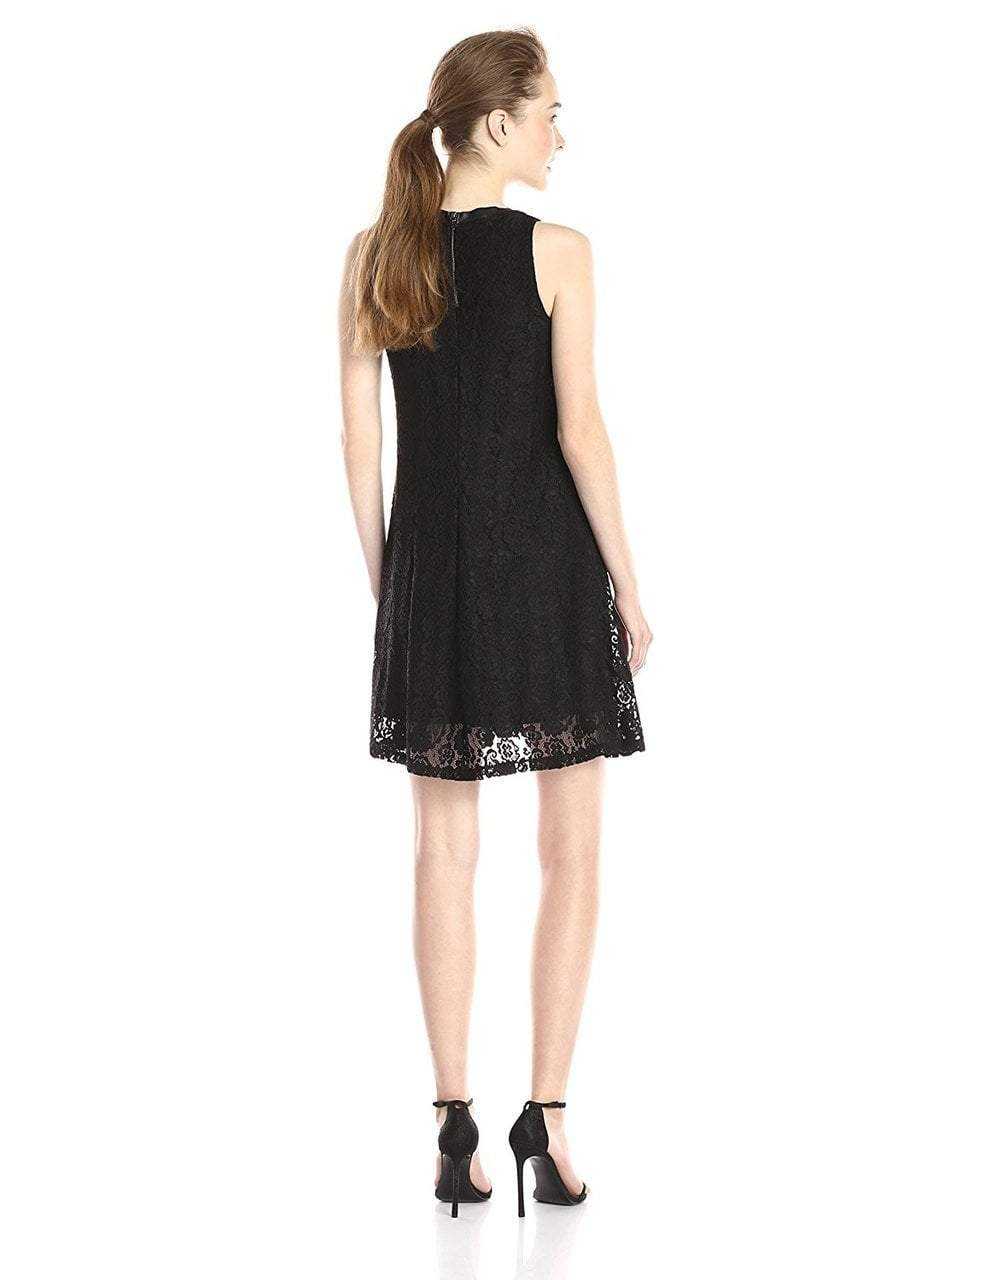 Taylor, Taylor - Lace Embellished A-line Dress 5686M